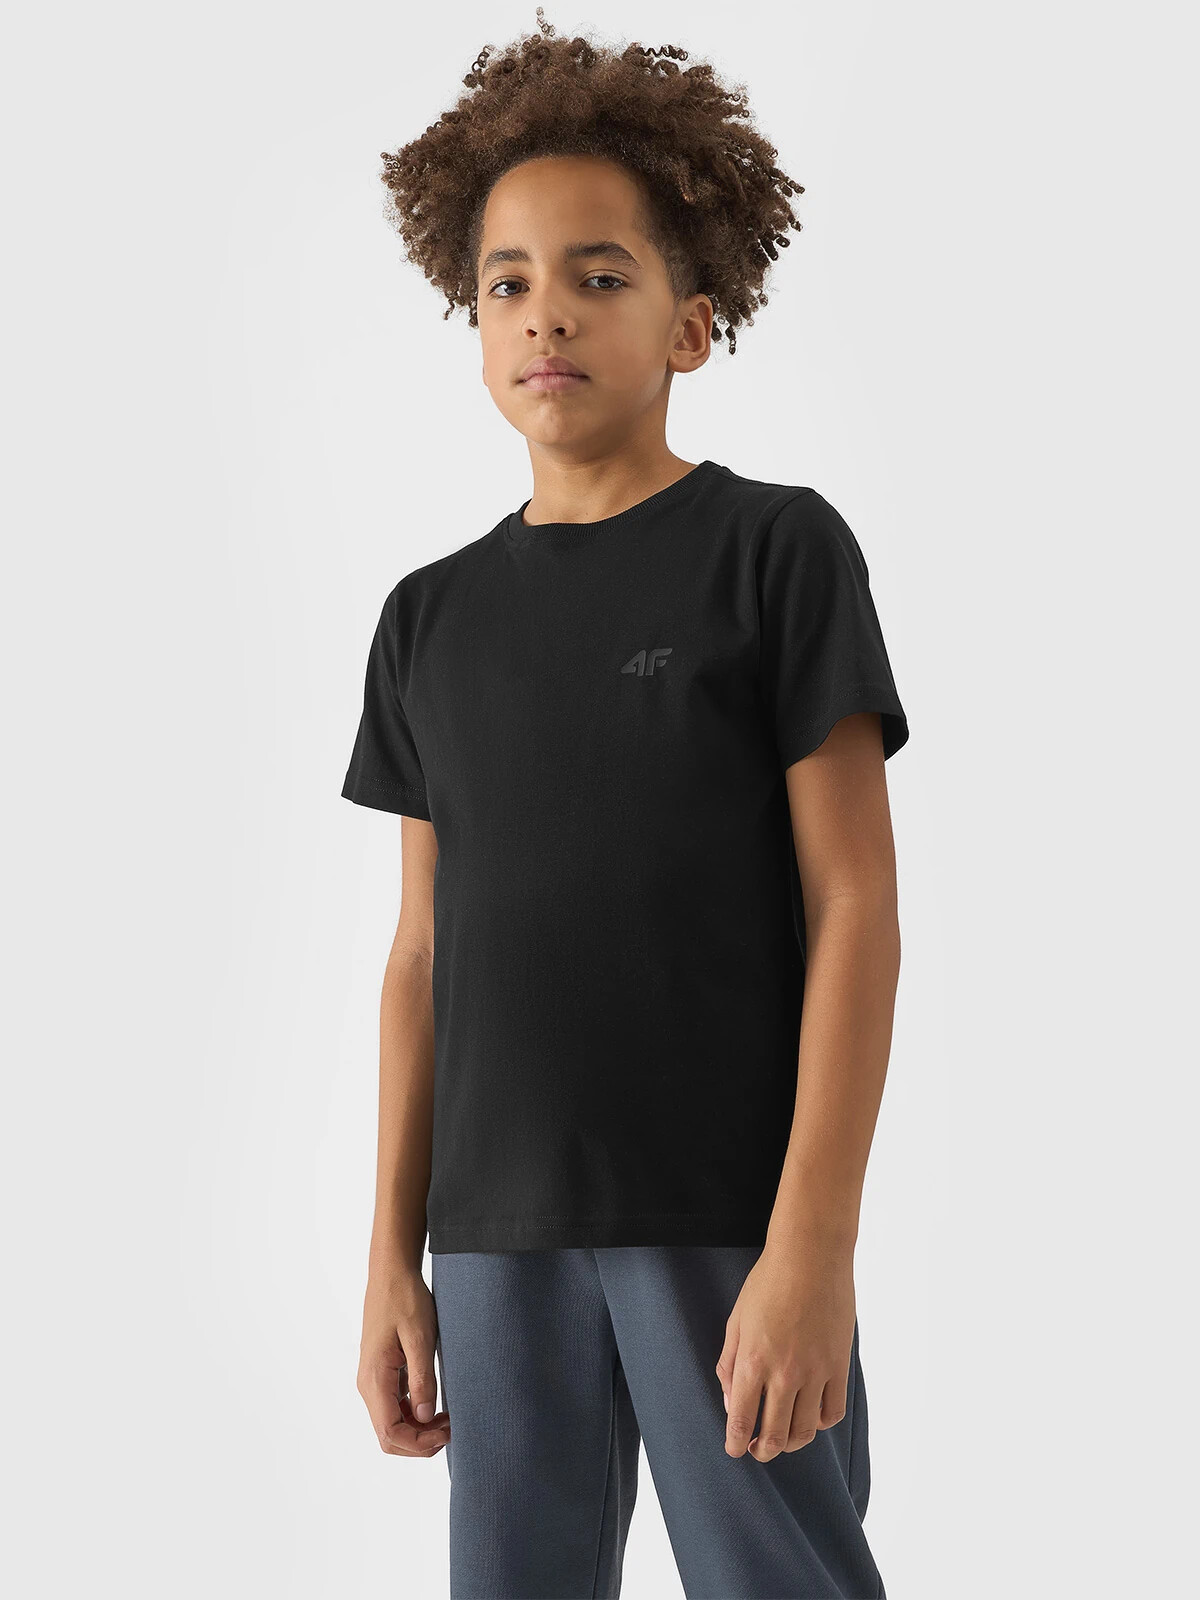 Boys' Plain T-Shirt 4F - Black